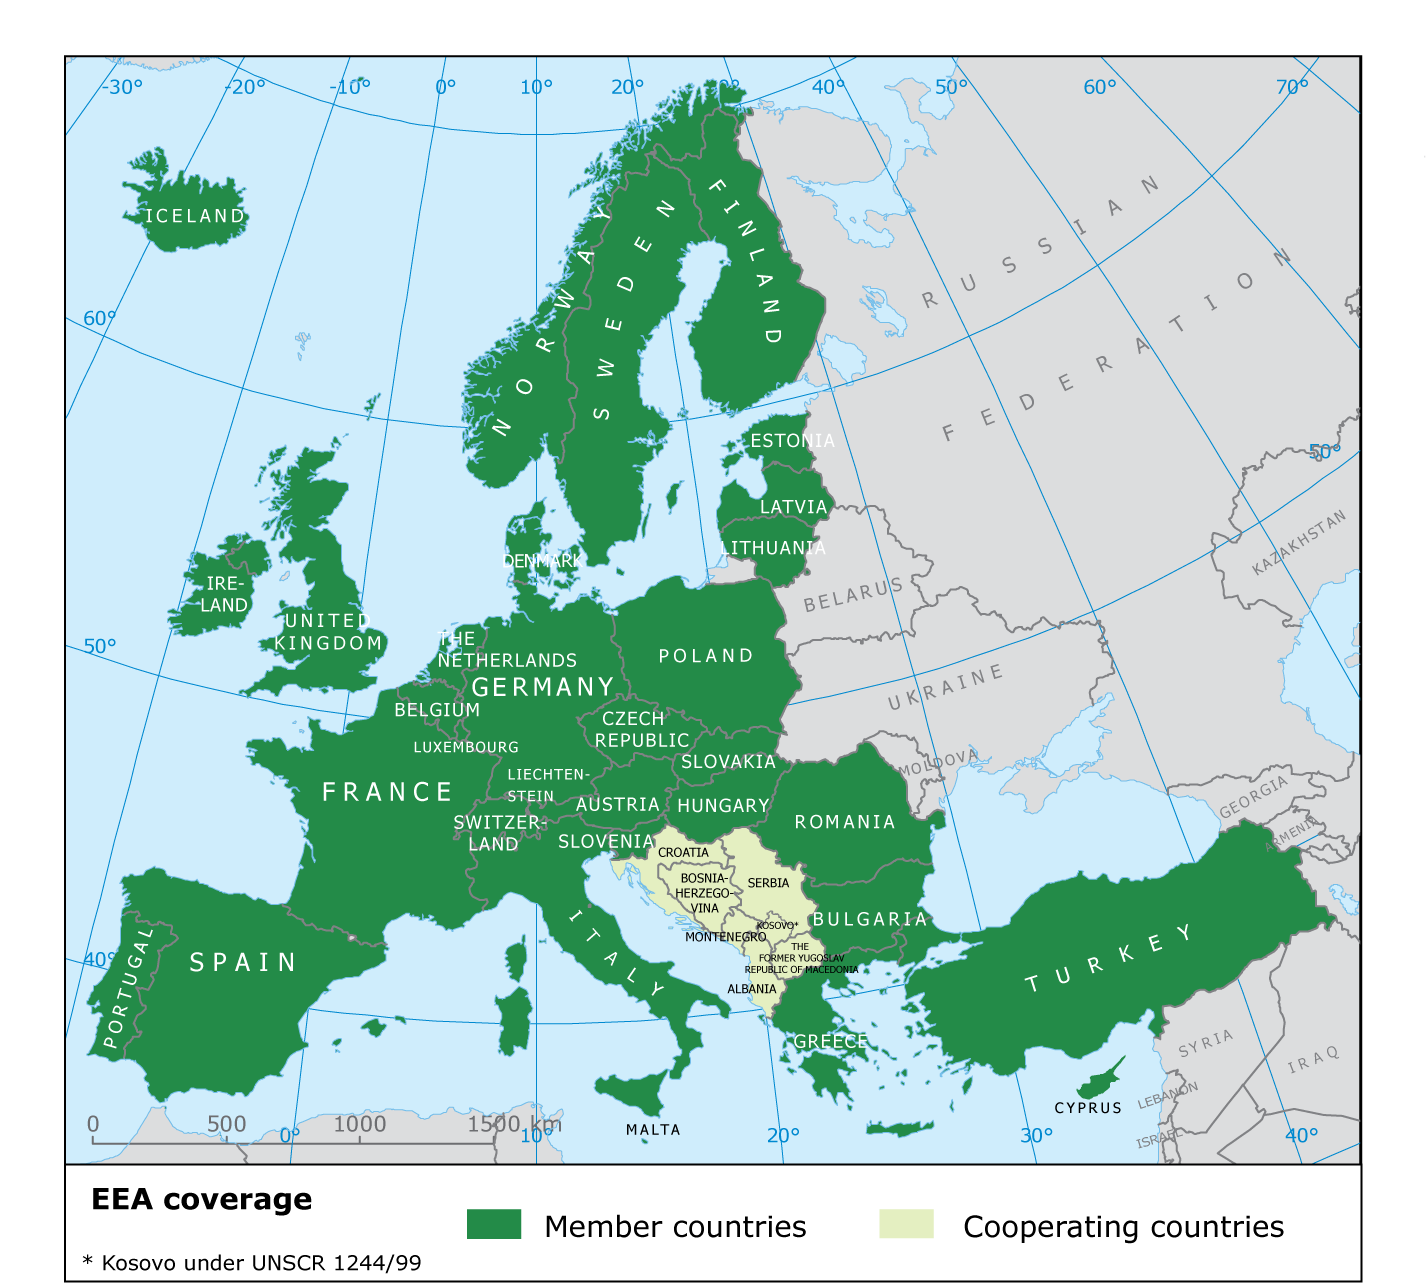 EEA member countries